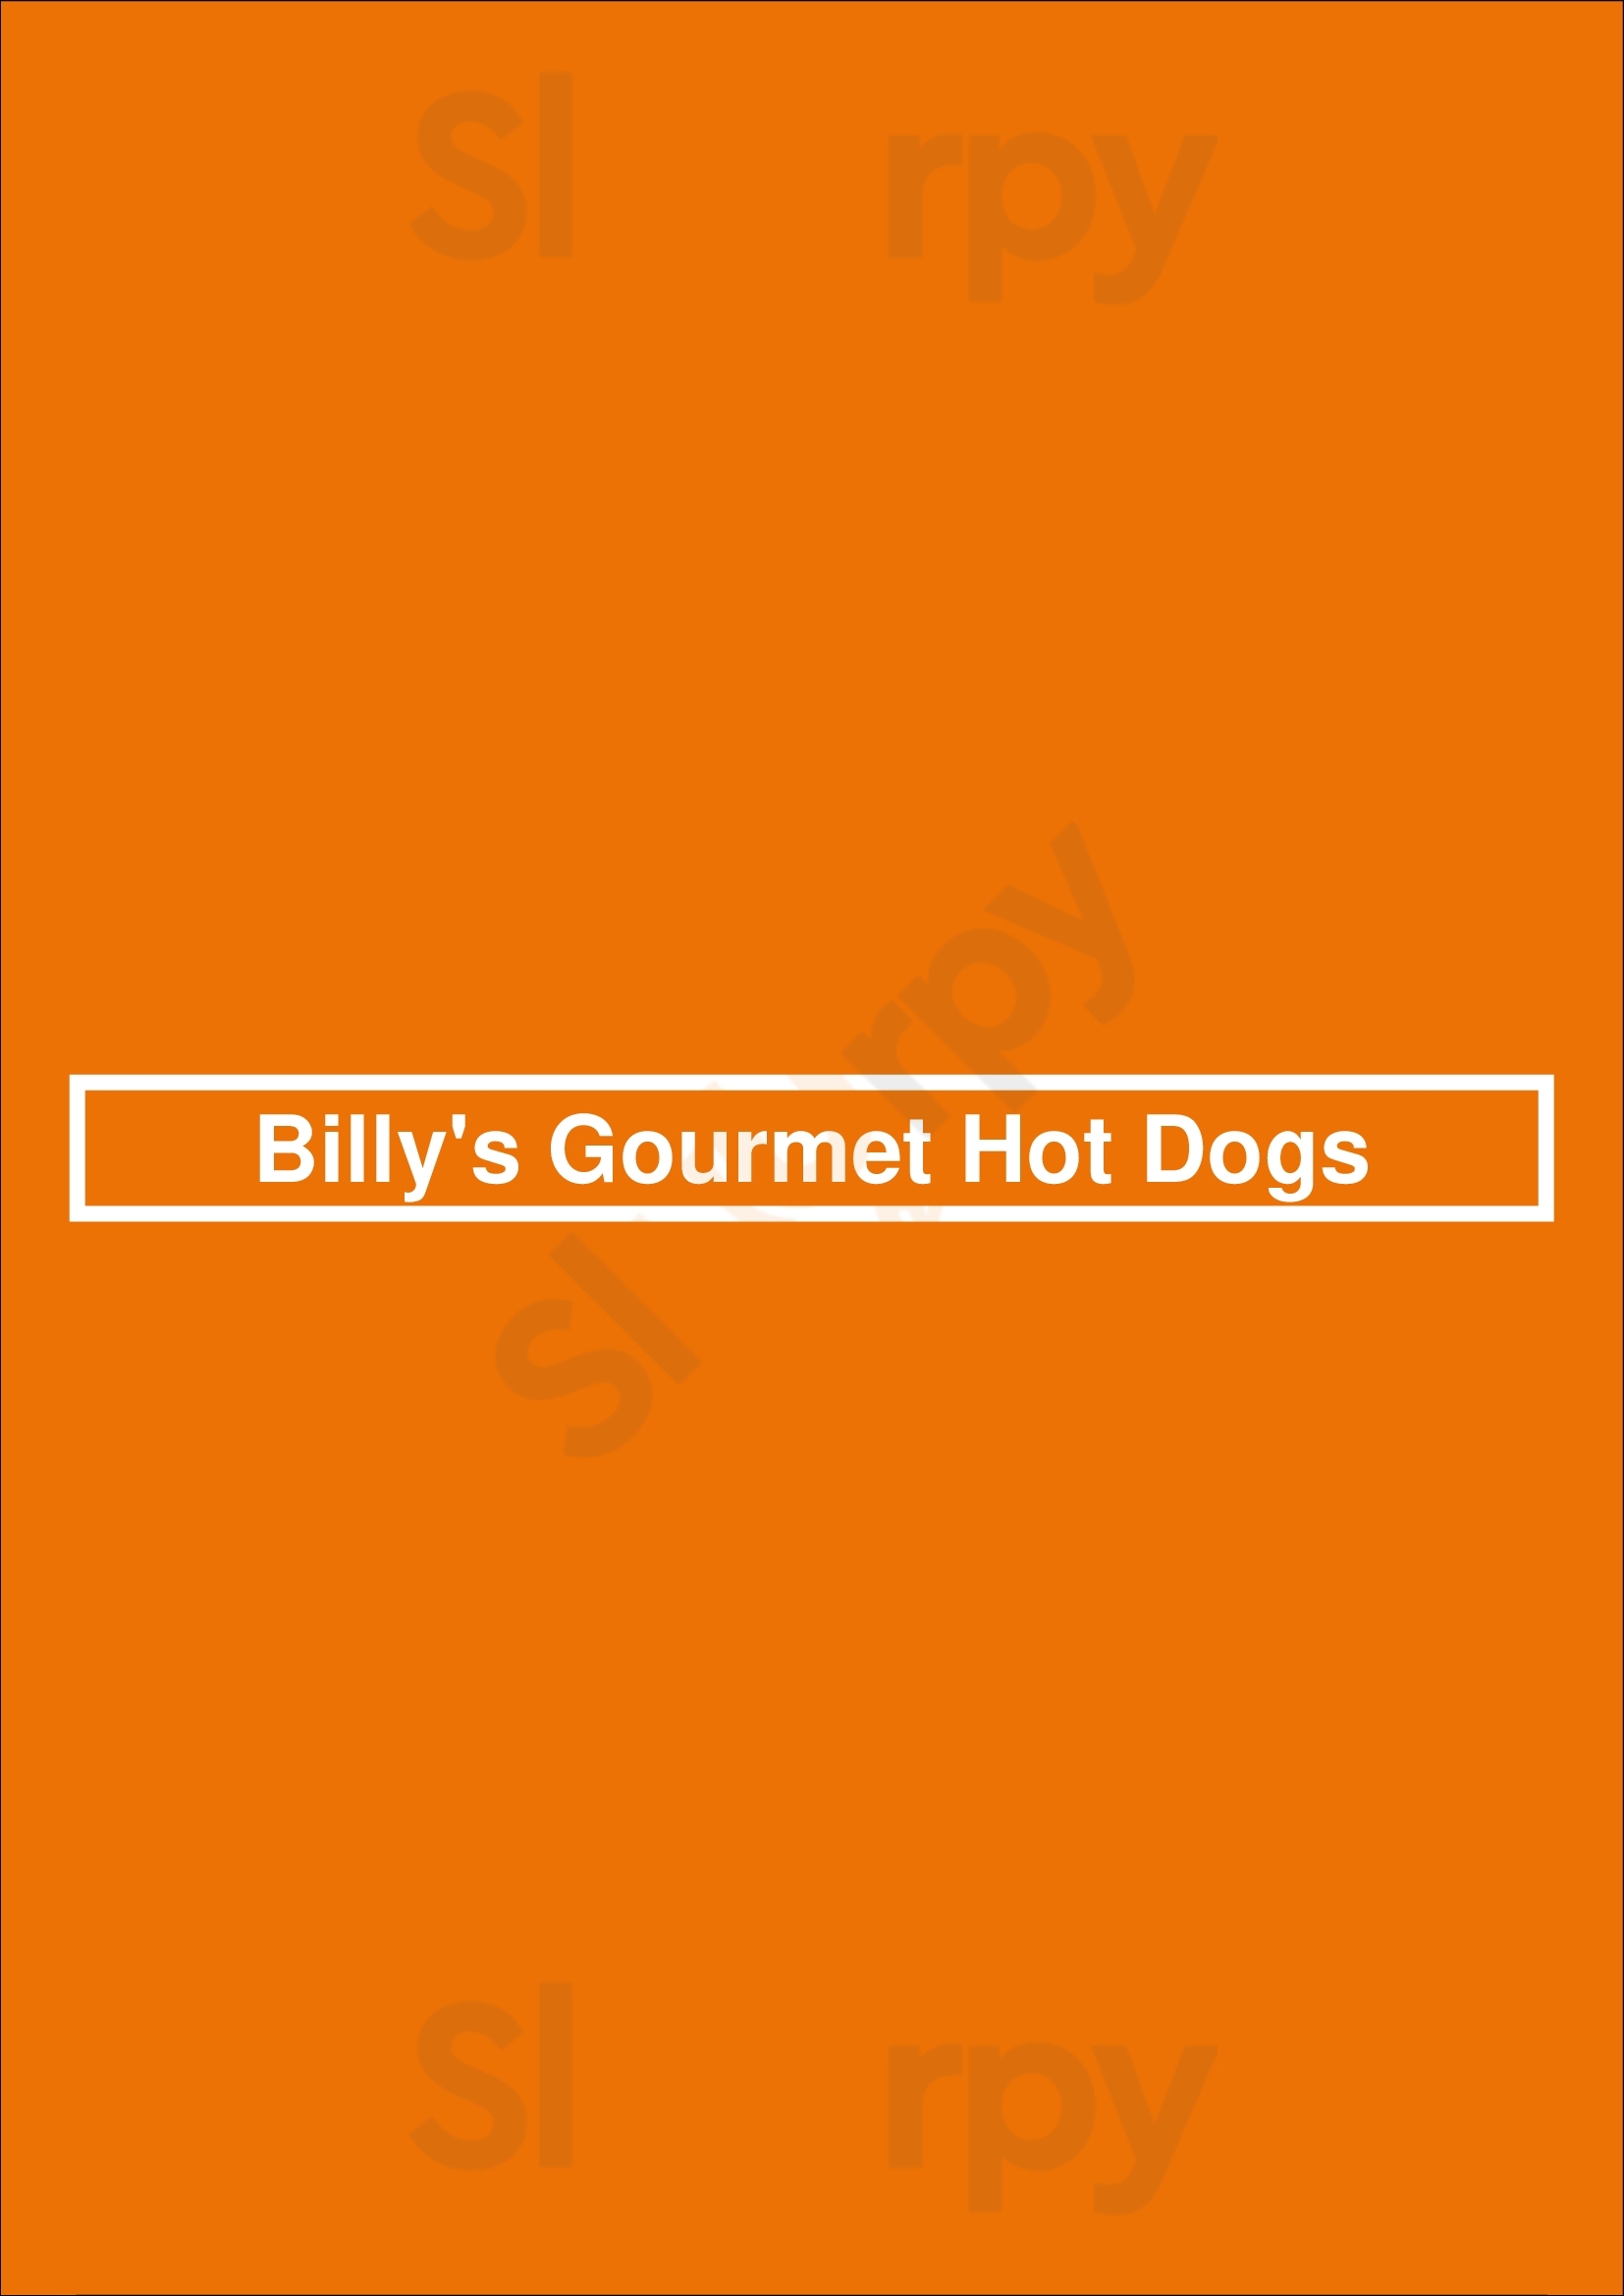 Billy's Gourmet Hot Dogs Denver Menu - 1